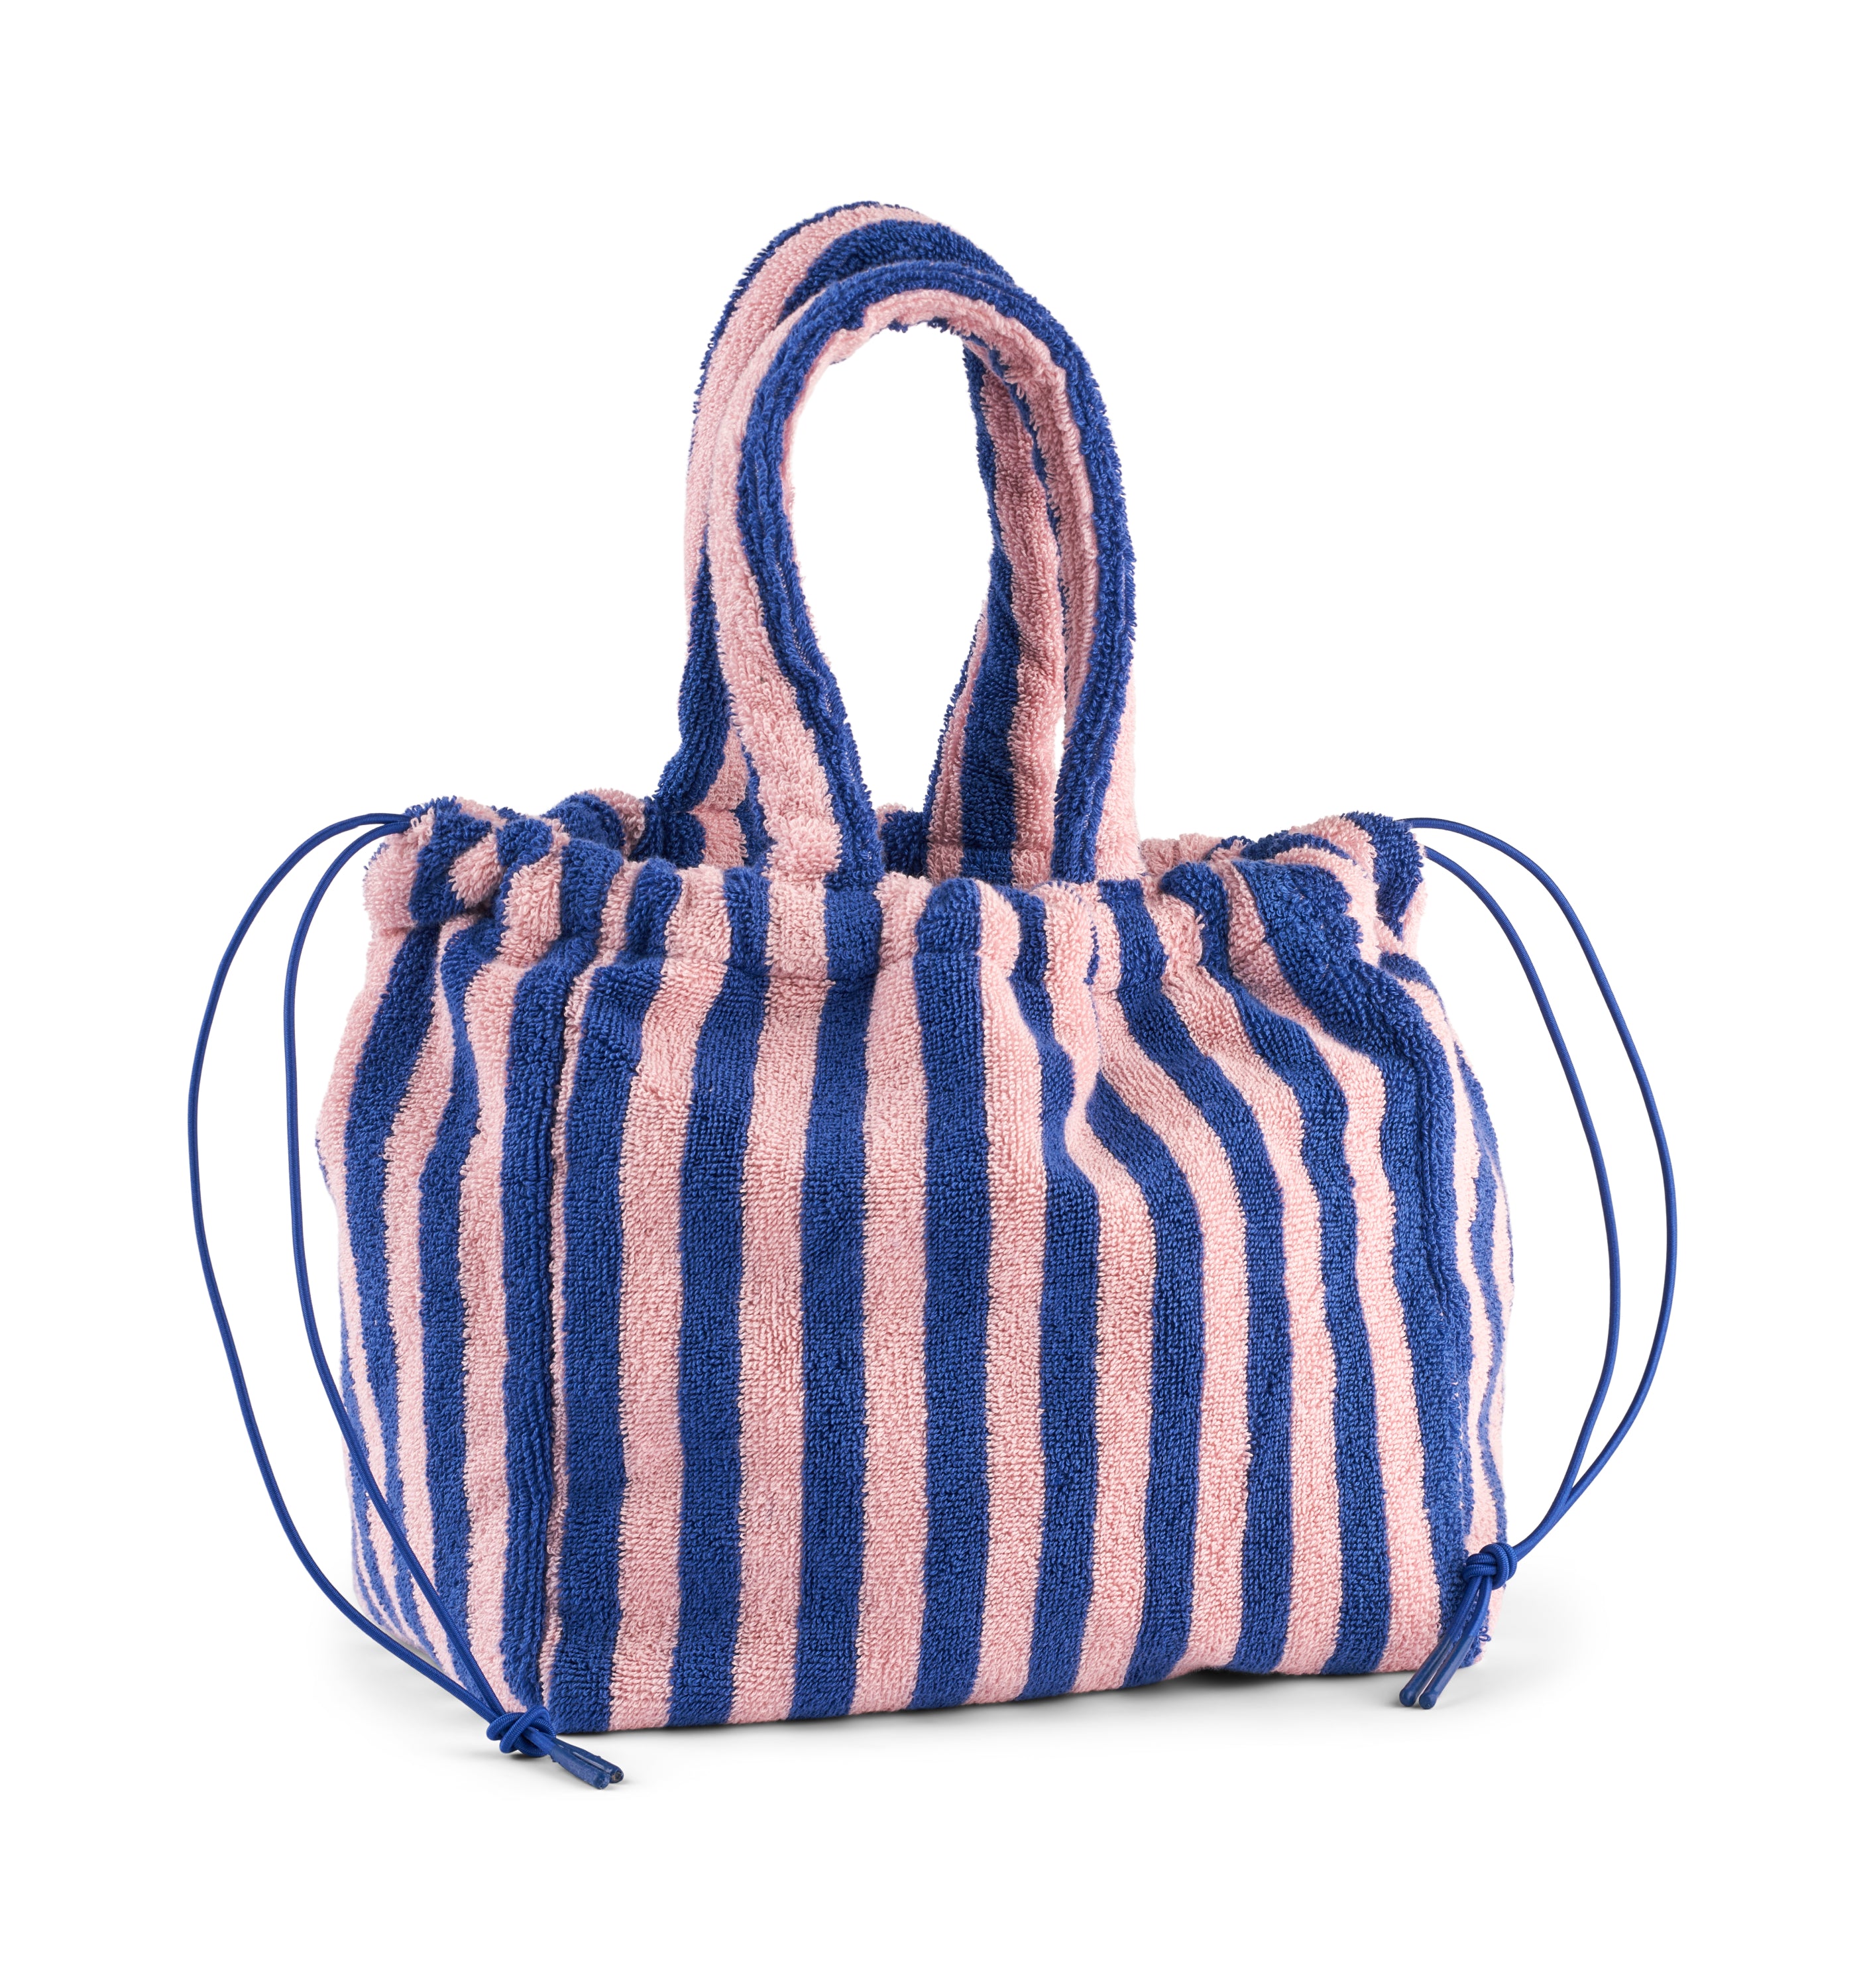 Naram handbag small, dazzling blue & rose